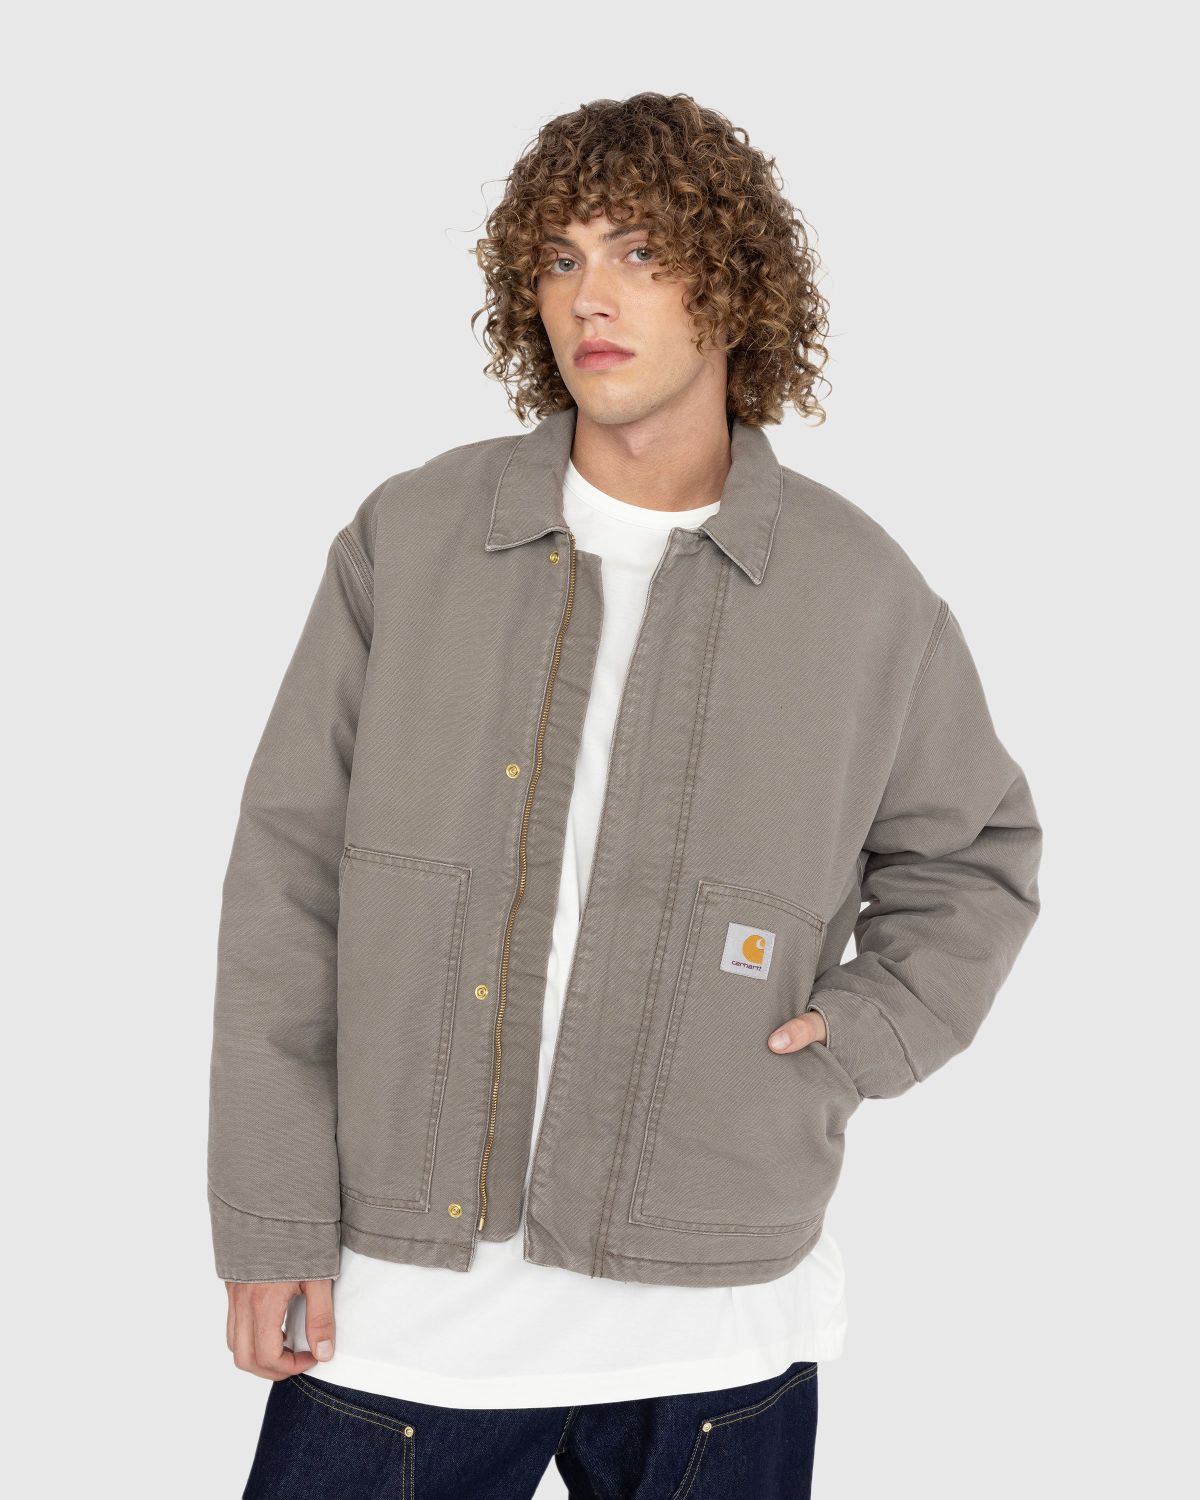 Carhartt WIP – OG Arcan Jacket Barista/Aged Canvas - Outerwear - Multi - Image 2